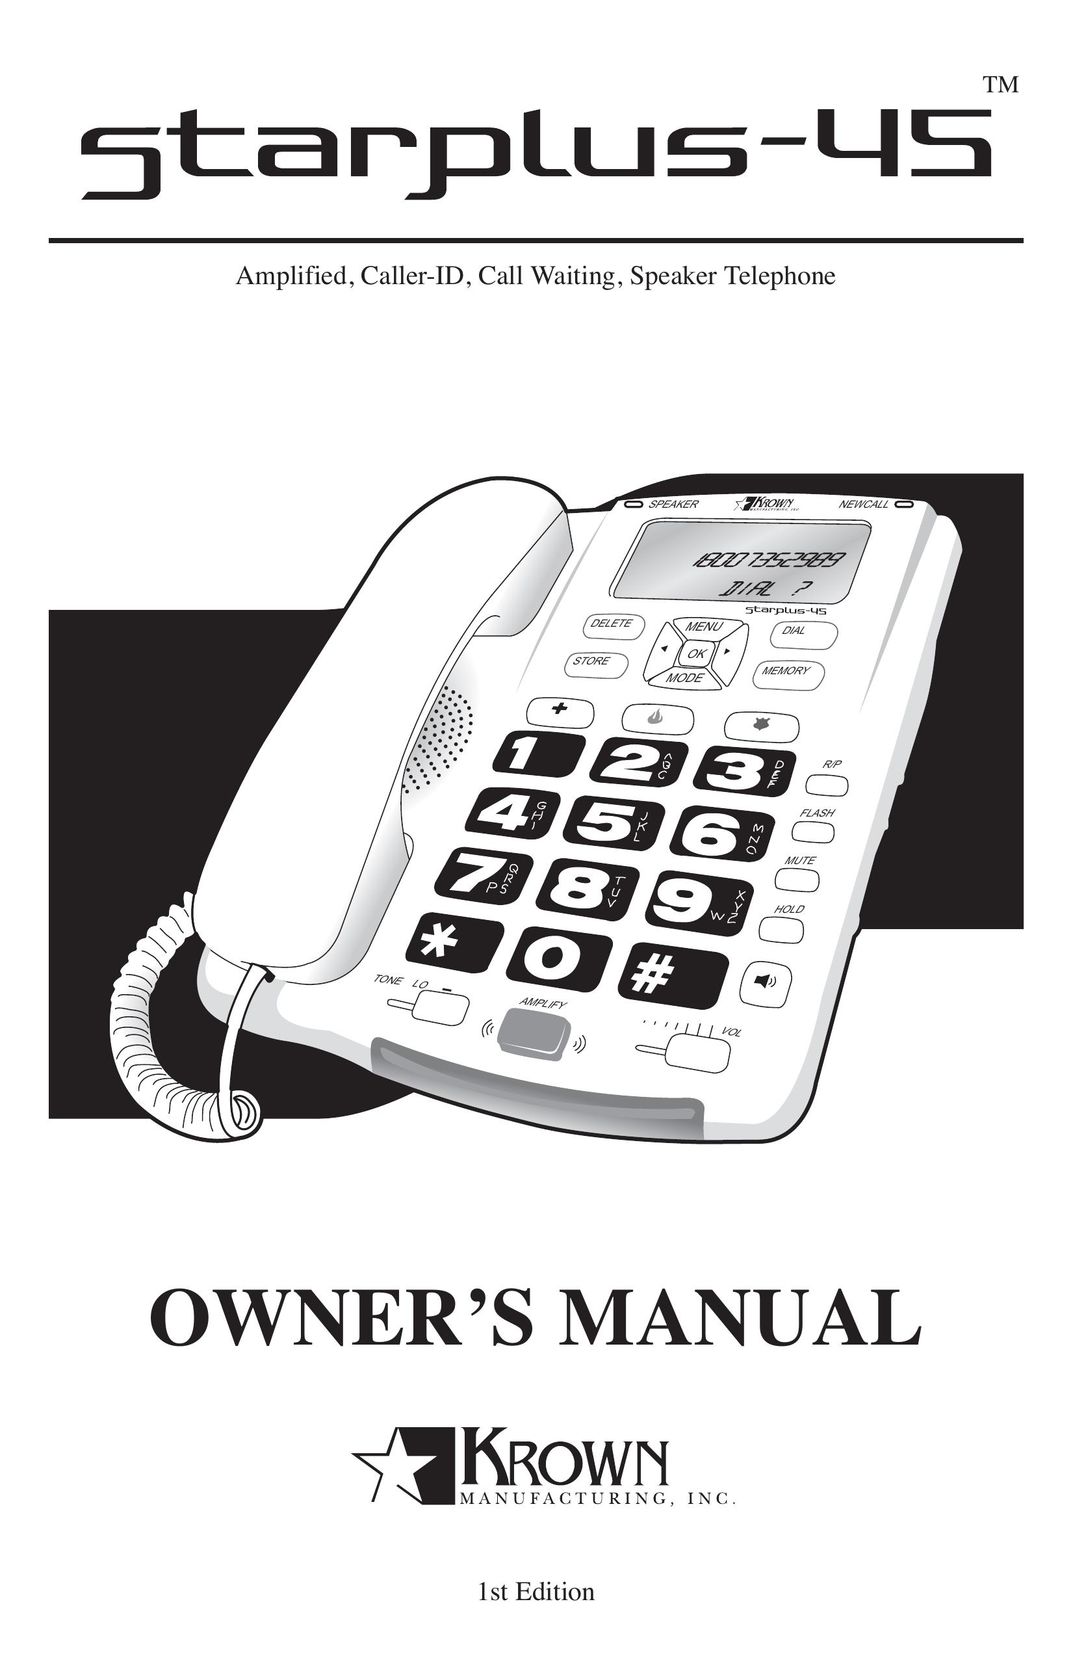 Krown Manufacturing StarPlus-45 Conference Phone User Manual